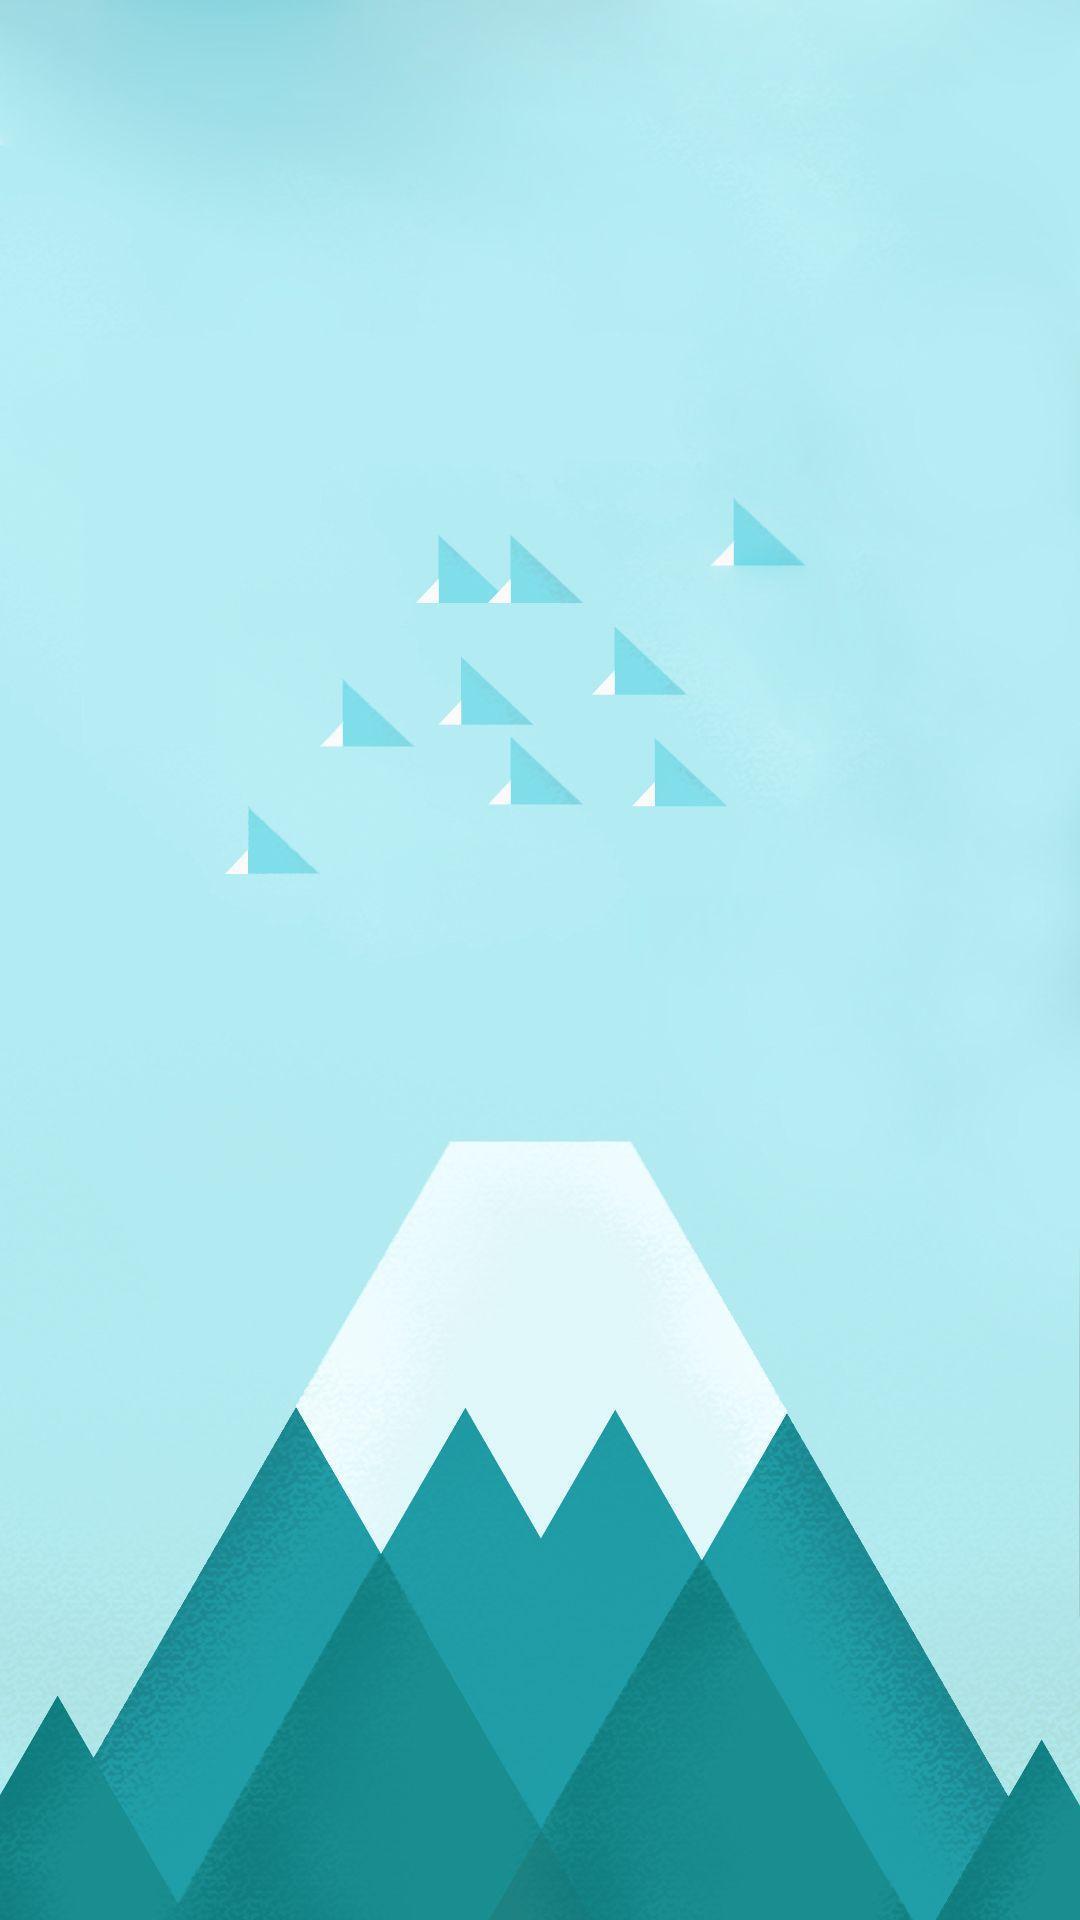 OnePlus 2 wallpaper released